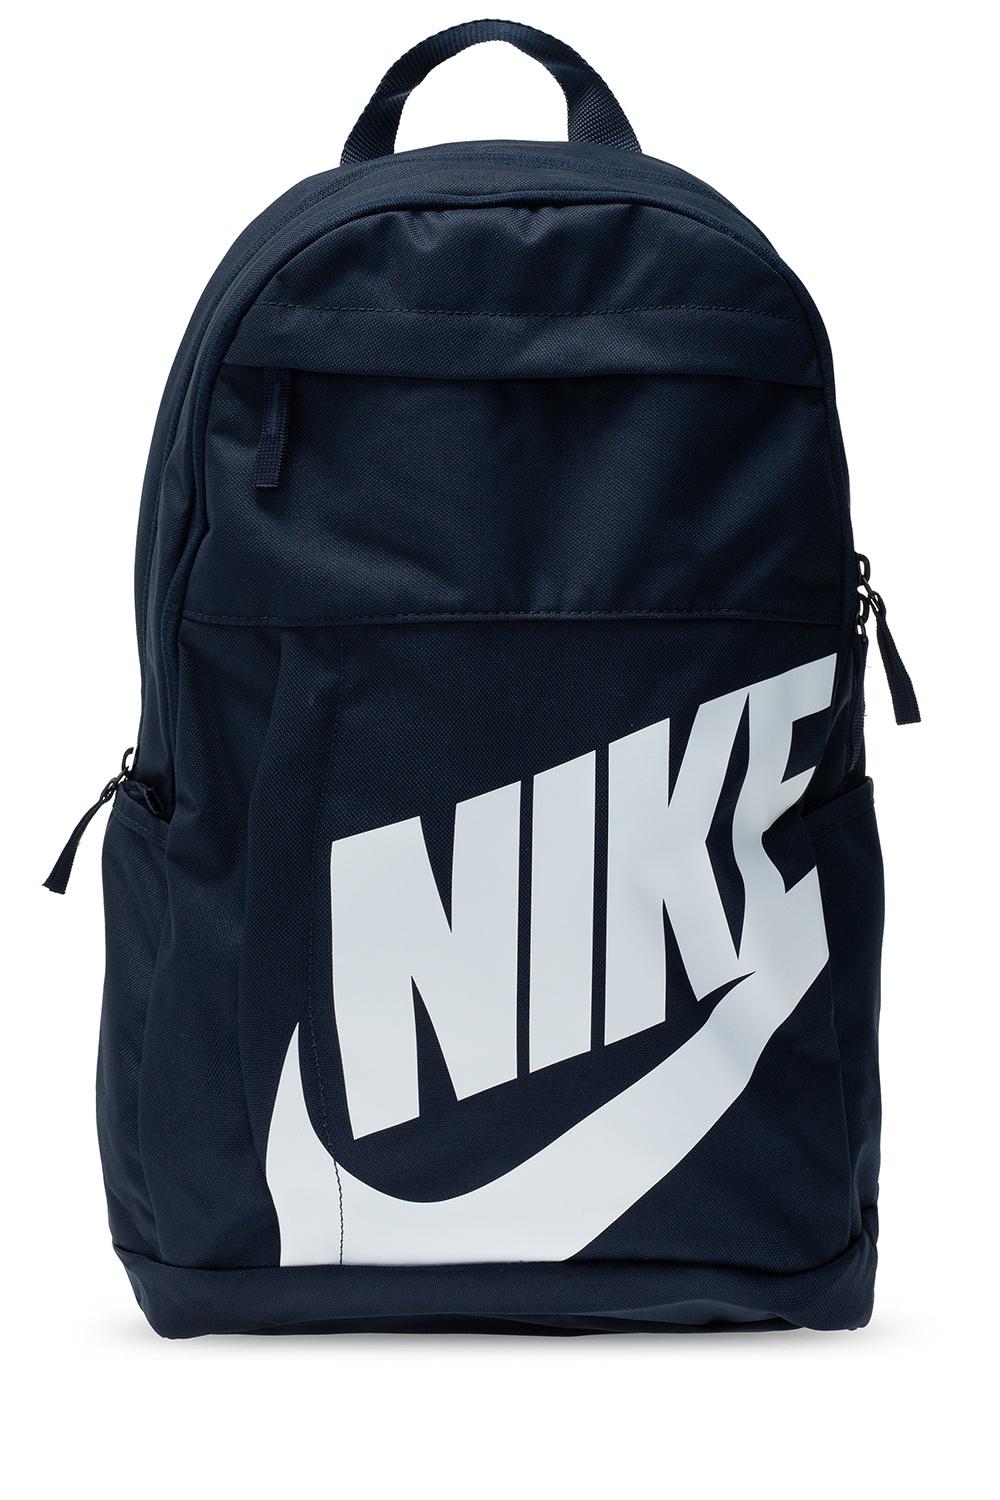 Nike Elemental Backpack 2.0 in Navy Blue (White) - Lyst